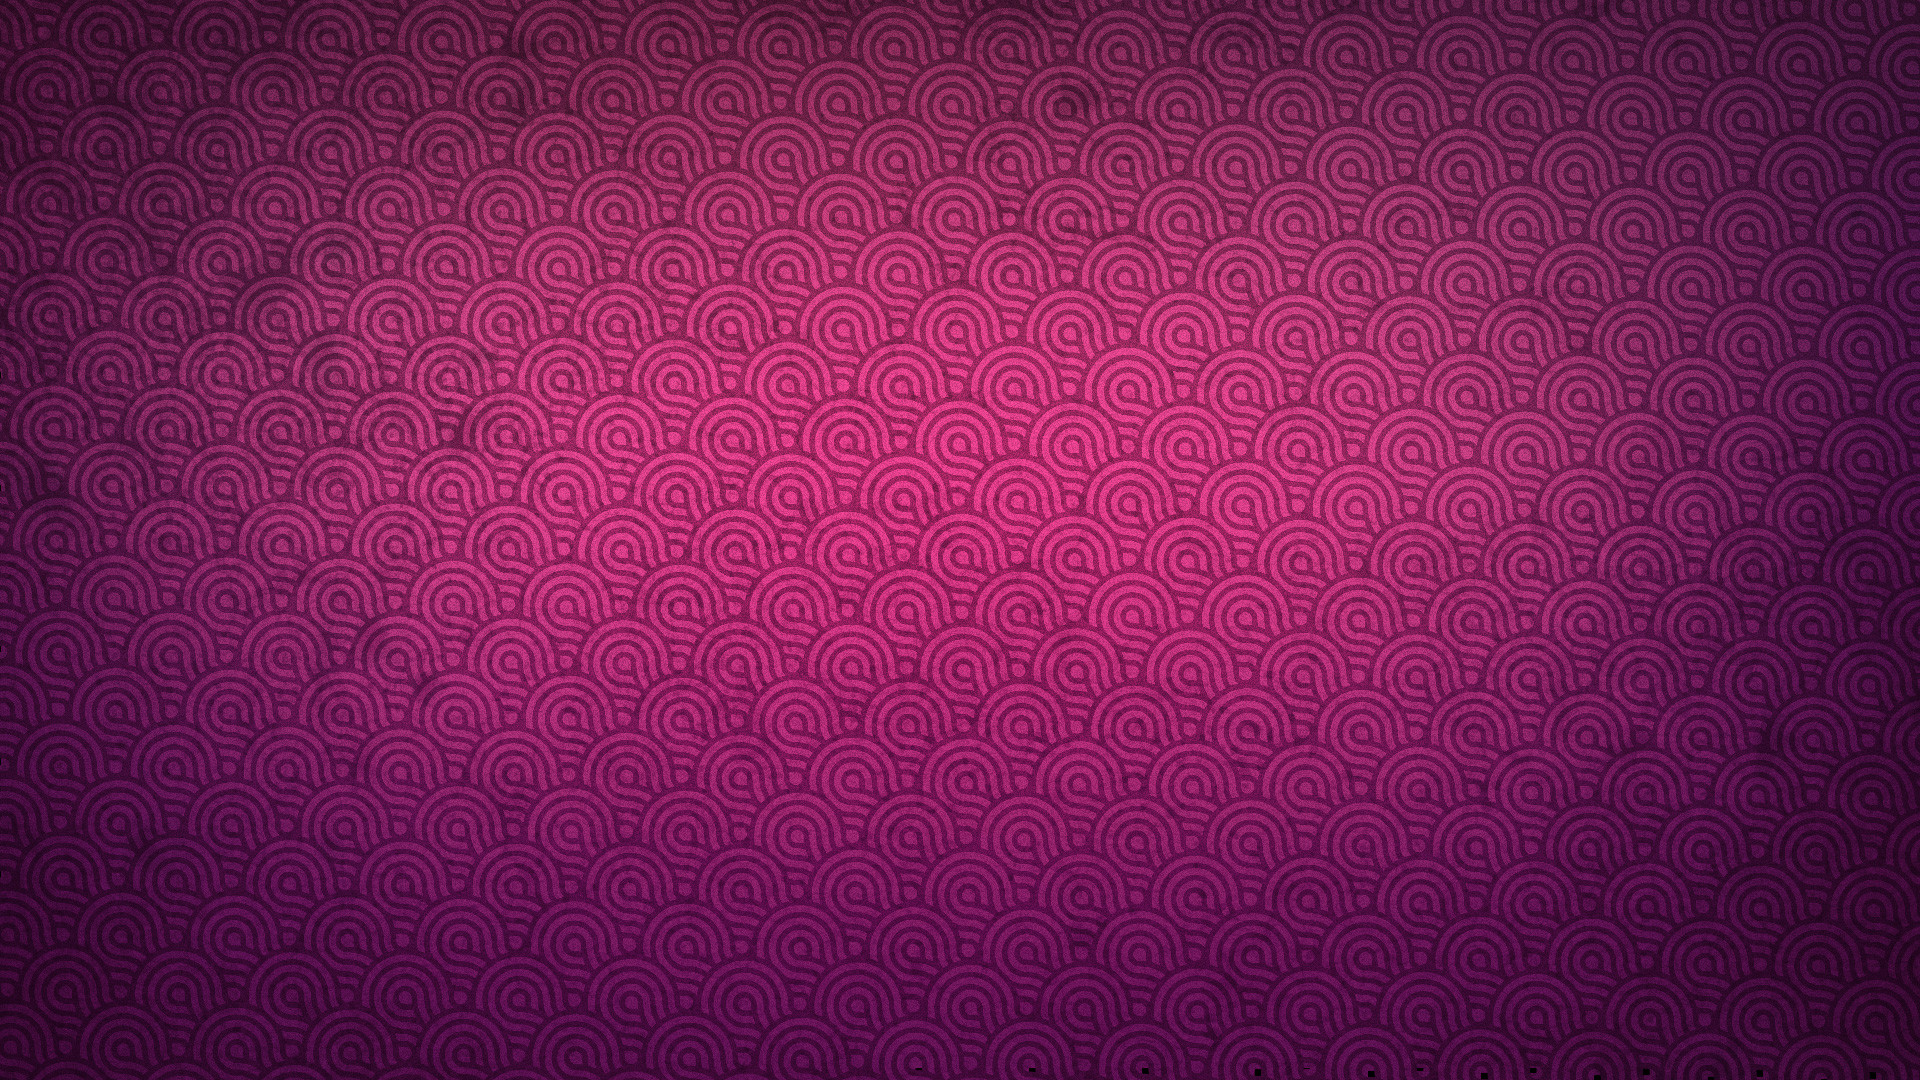 1920x1080 Elegant HD Wallpapers - THIS Wallpaper Best 10 Purple wallpaper iphone  ideas on Pinterest | Tumblr .